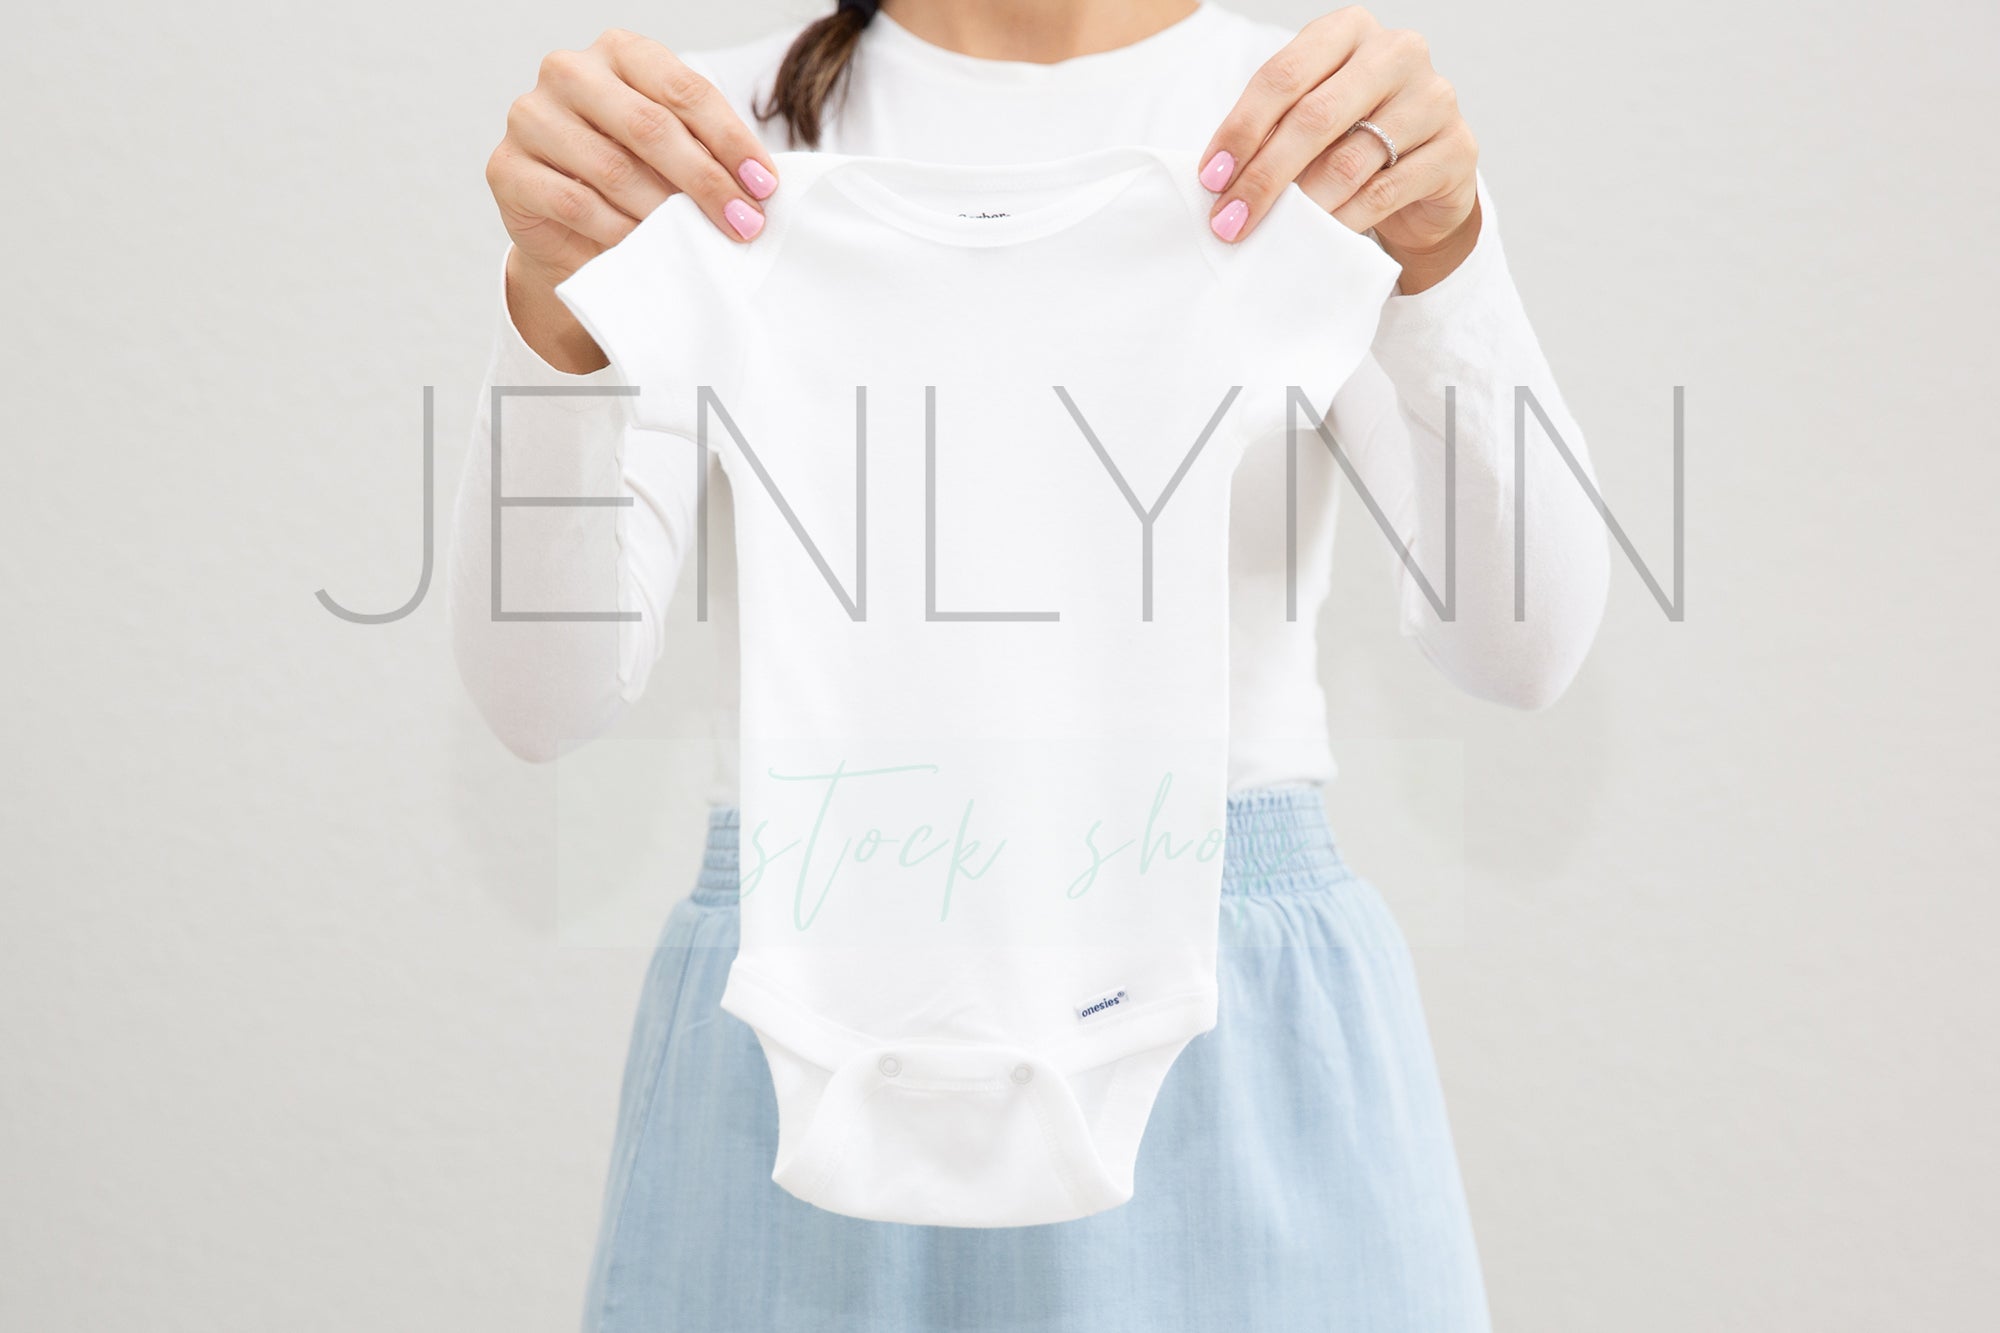 Download Simple White Hanging Onesie Mockup 3 Jenlynn Stock Shop